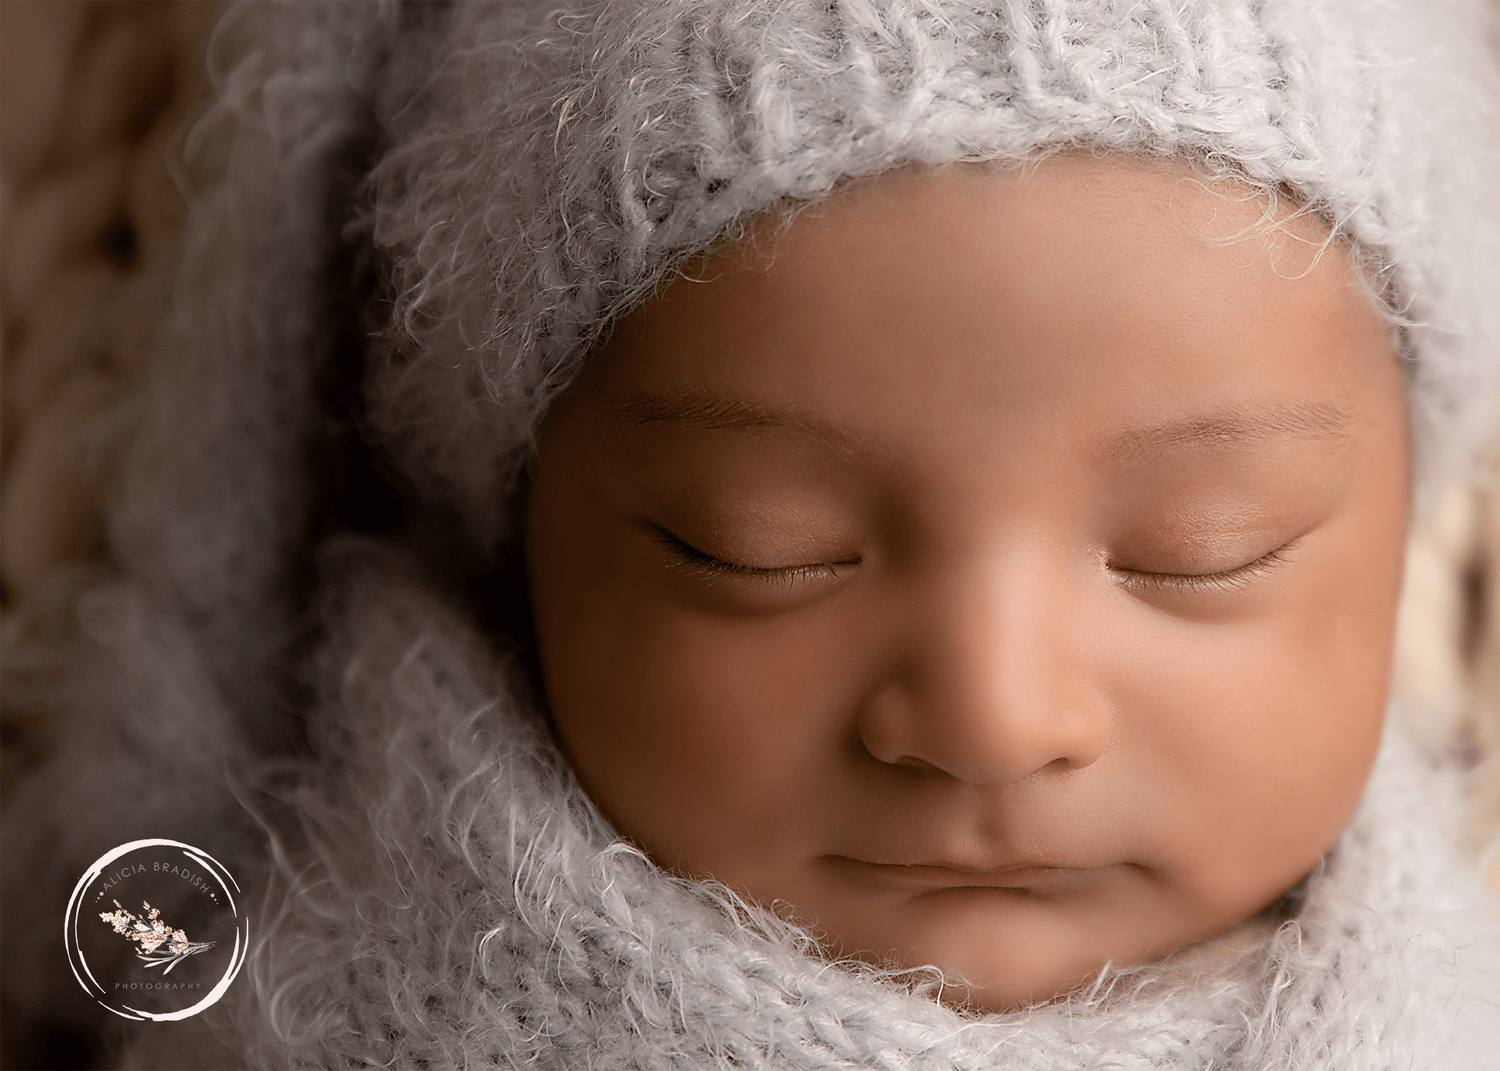   newborn photographer in washington dc, professional newborn photos, newborn portraits in washington dc